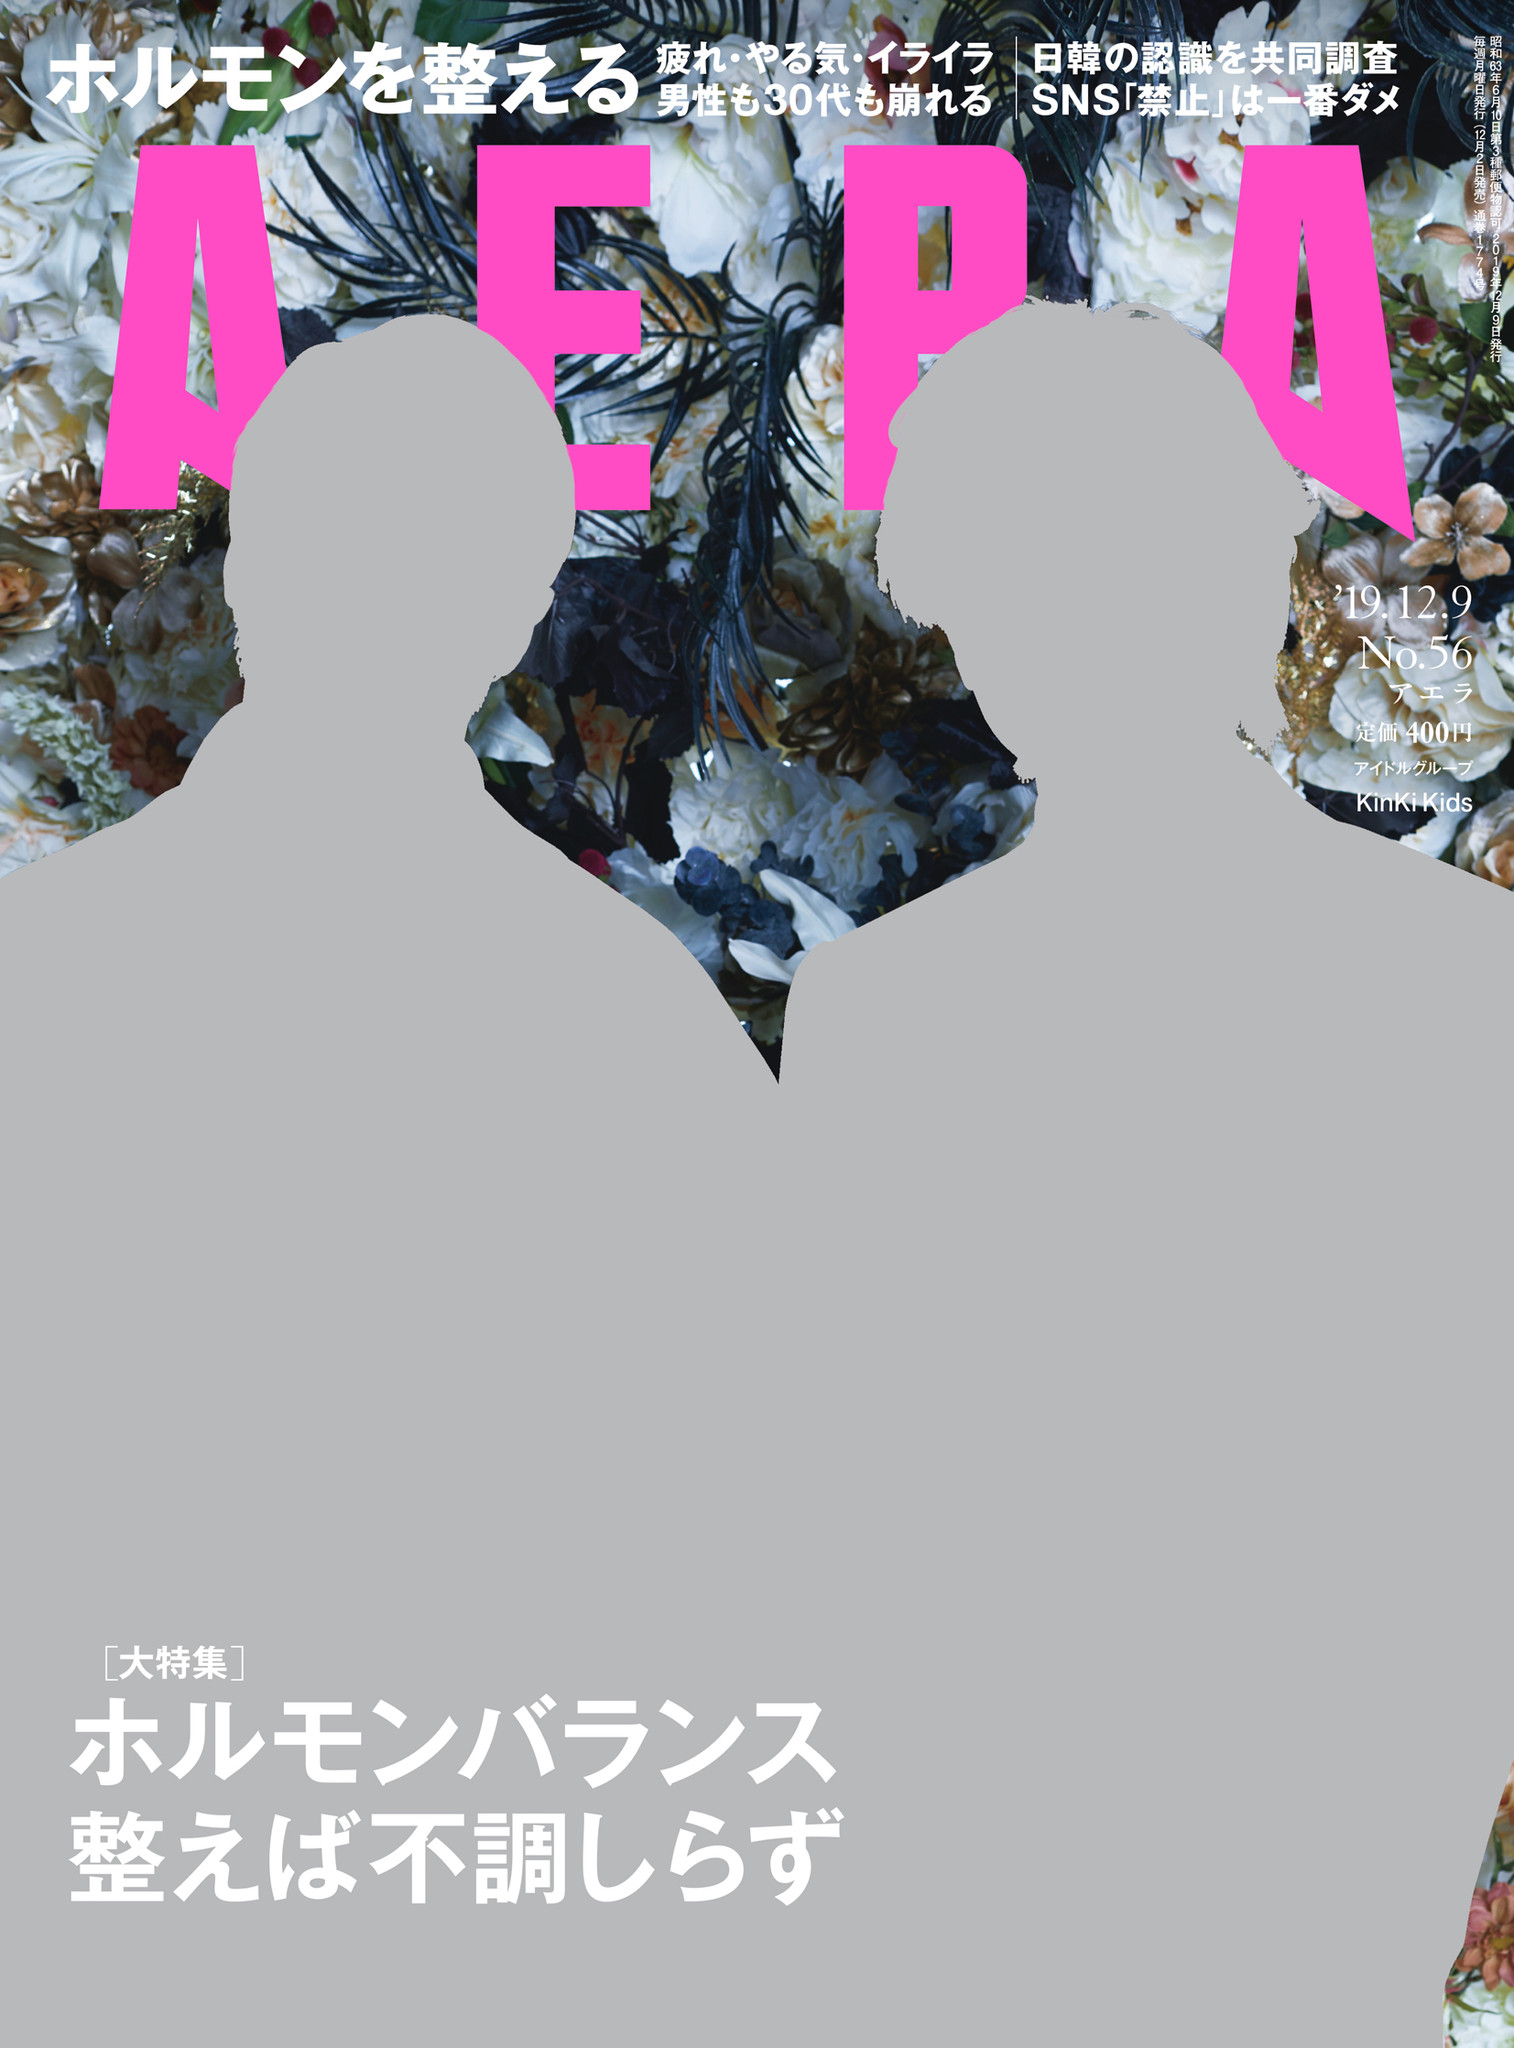 Kinki Kidsがaeraの表紙に登場 最新シングルと2年ぶりのドームライブを語るインタビューはカラーでたっぷり5ページ 株式会社朝日新聞出版のプレスリリース